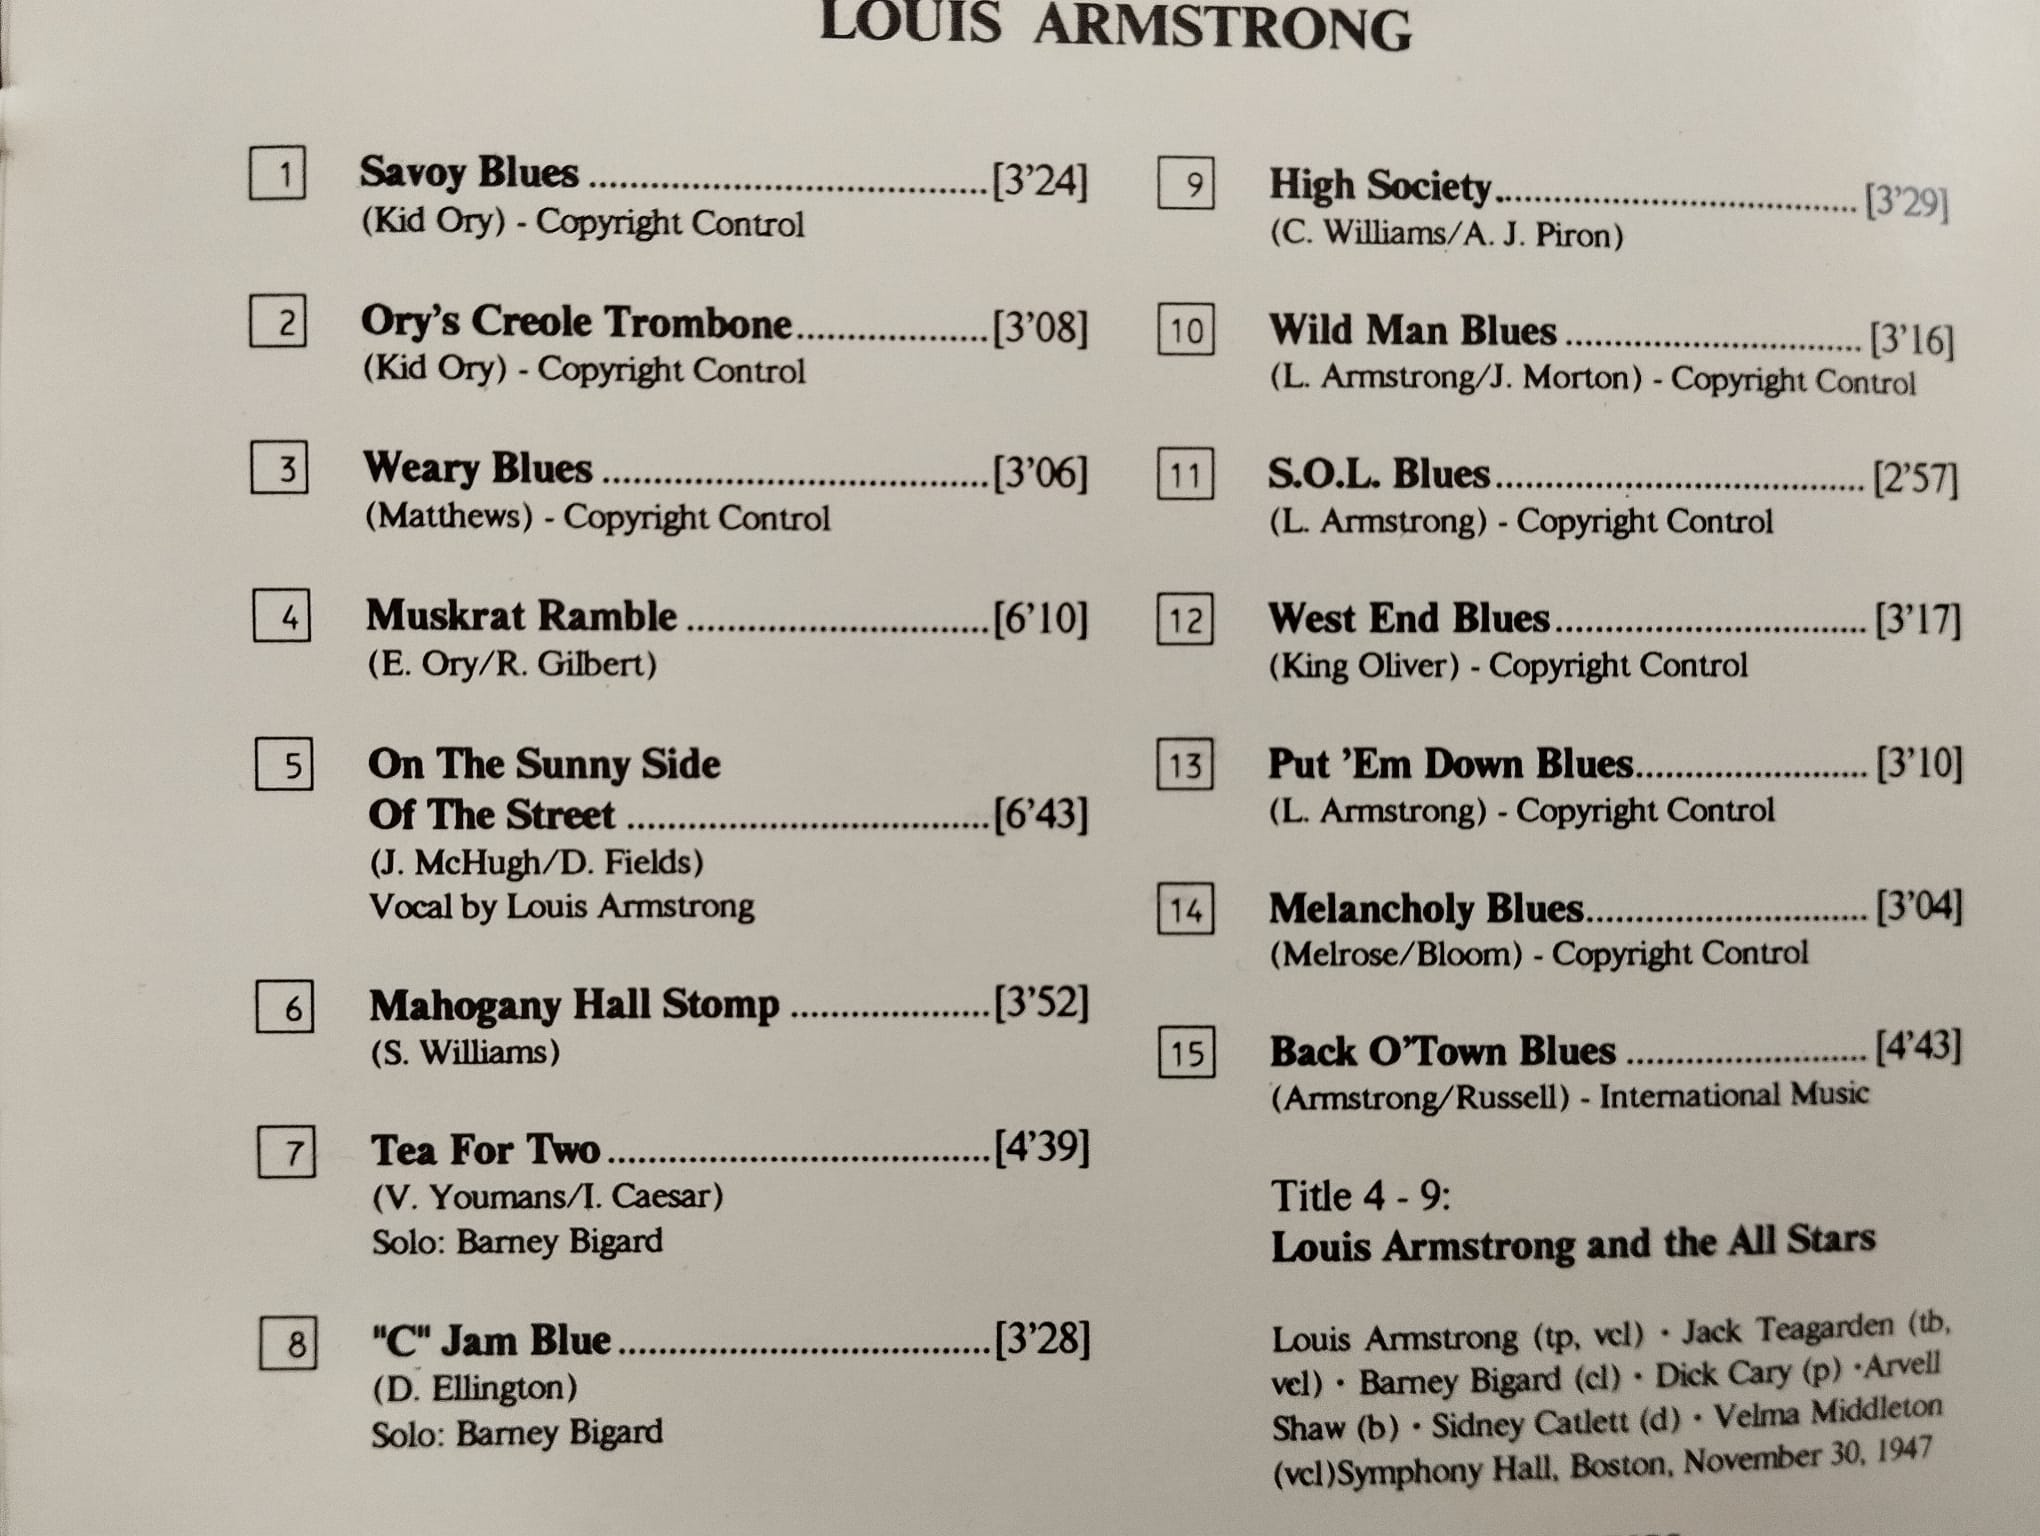 Louis Armstrong ‎– Jazz Music - 1995 Avrupa Basım 2. El  CD Albüm